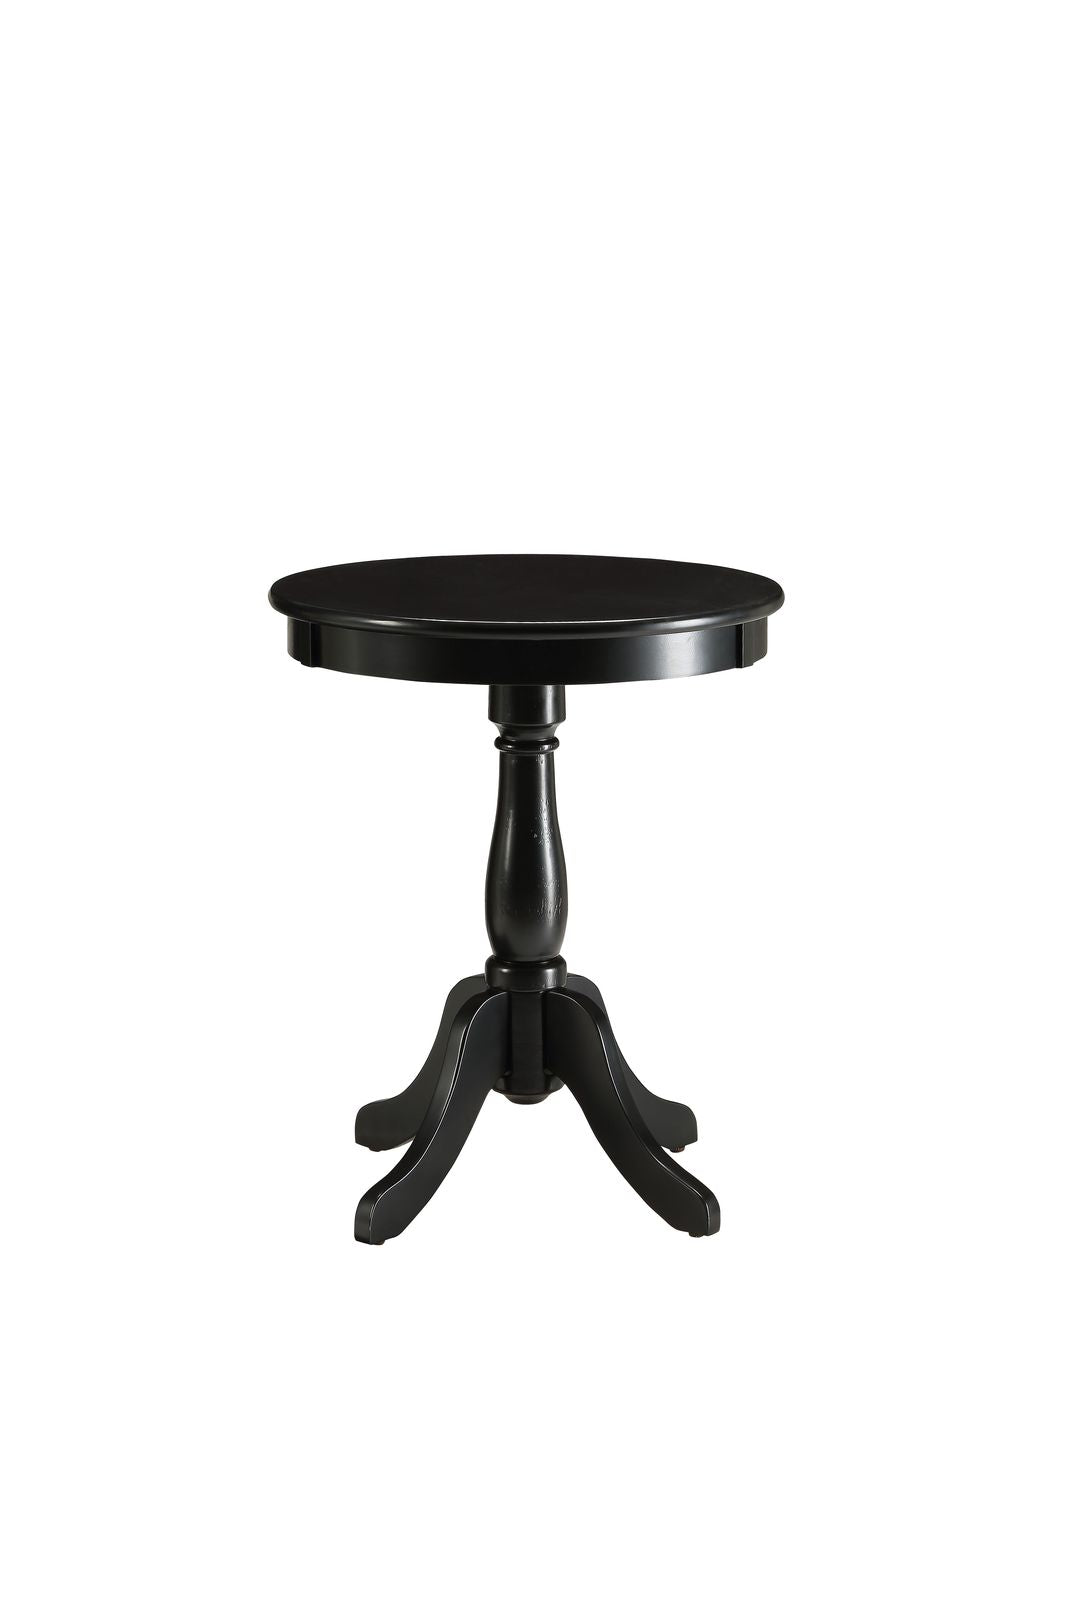 Alger Side Table in Black 82808